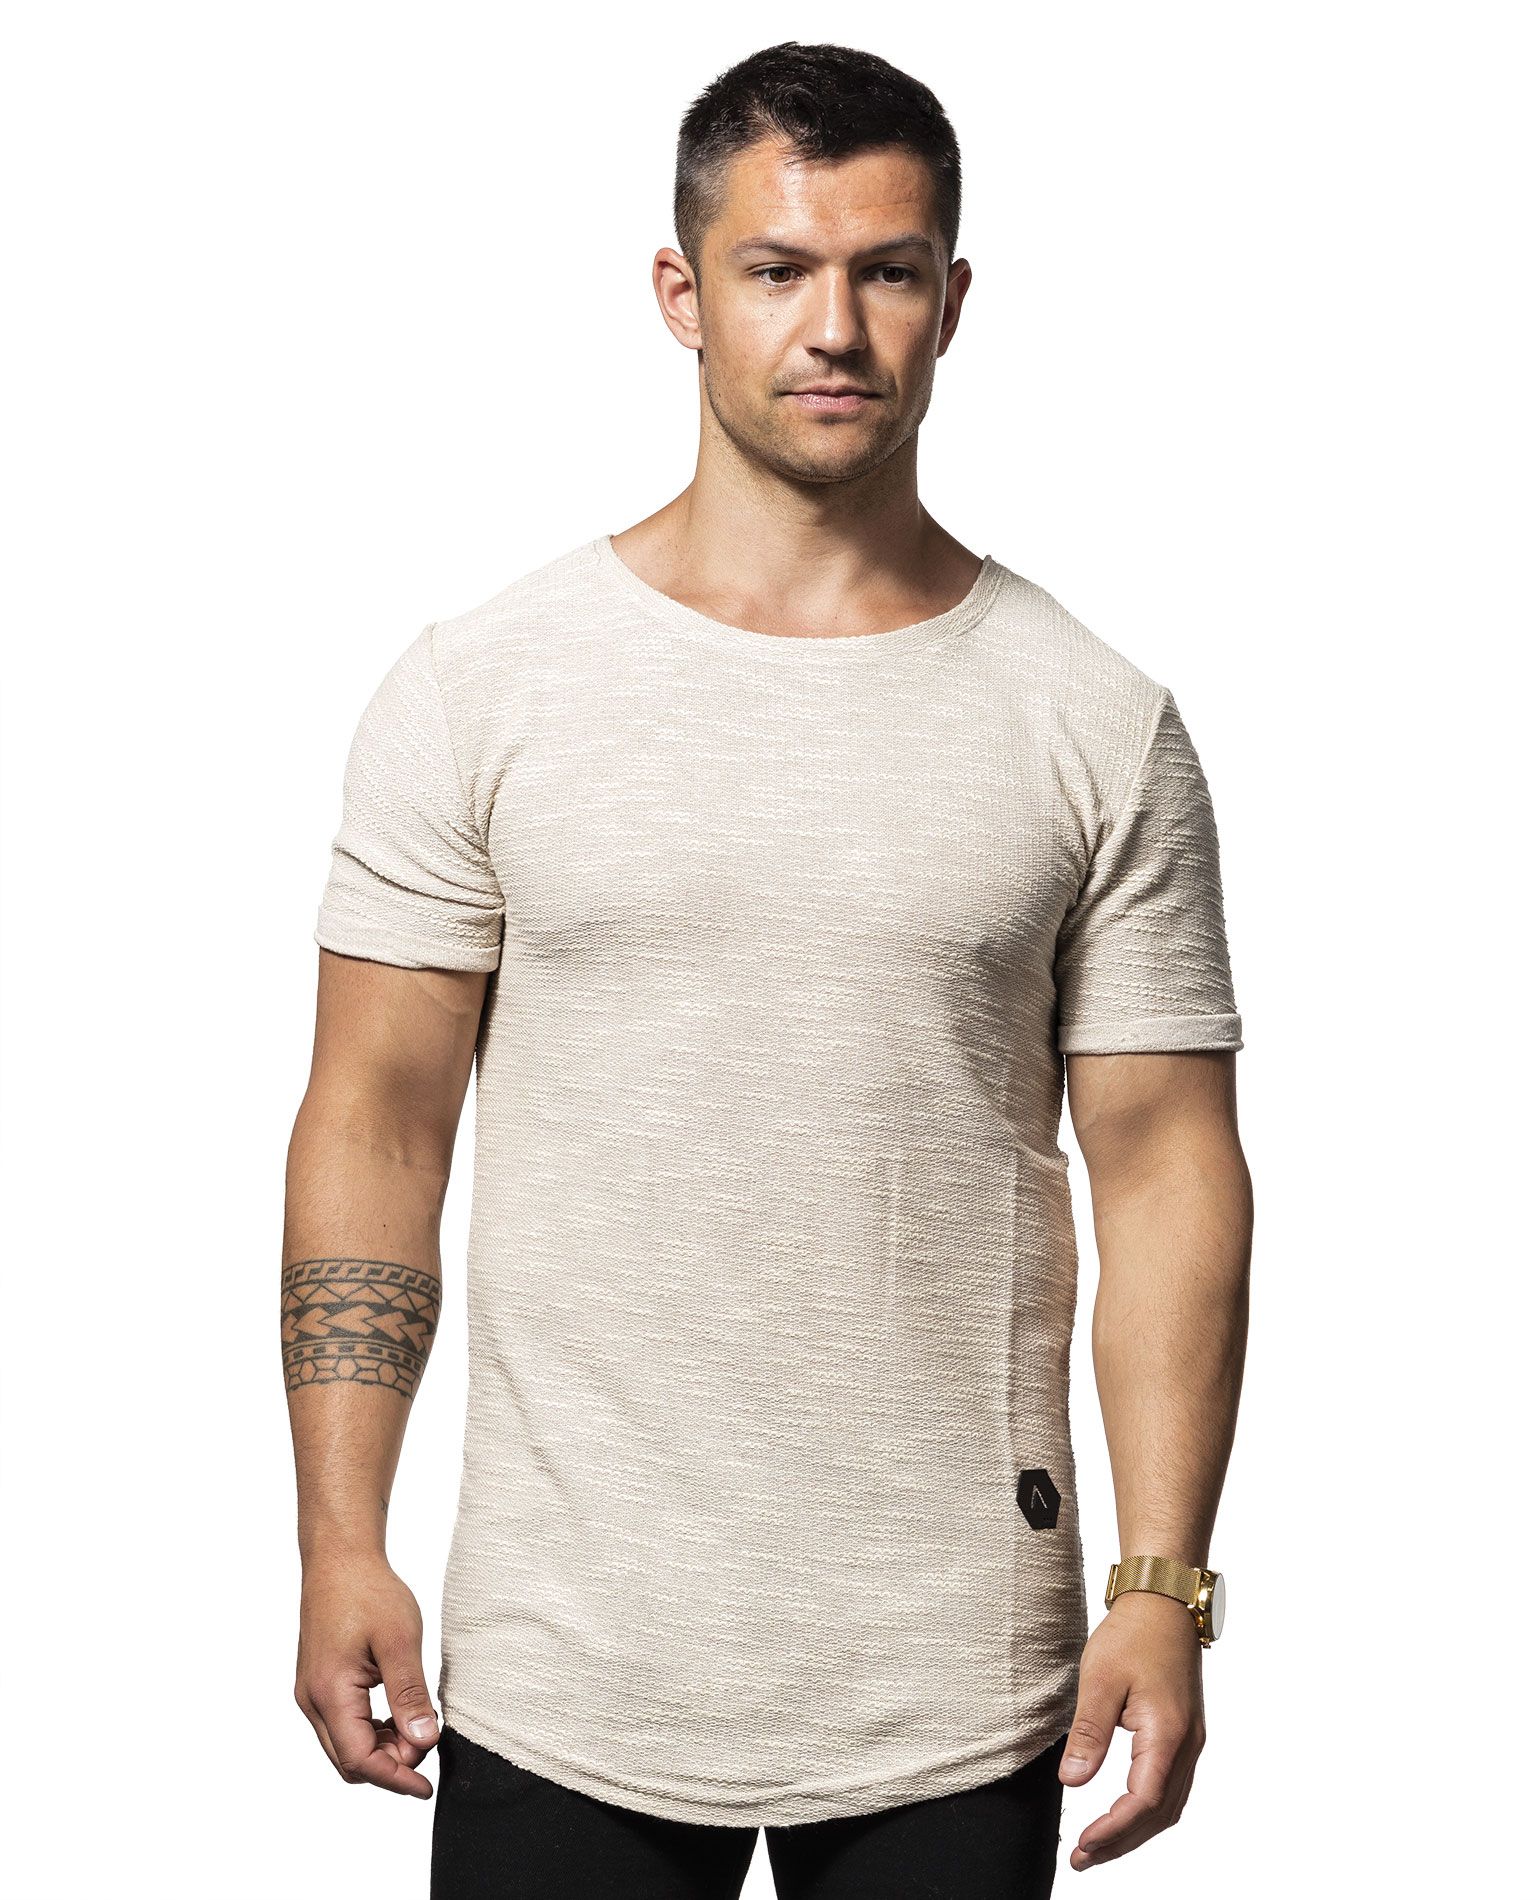 Beige T-Shirt Jerone - W008 - Basic-T-Shirts - Jerone.com